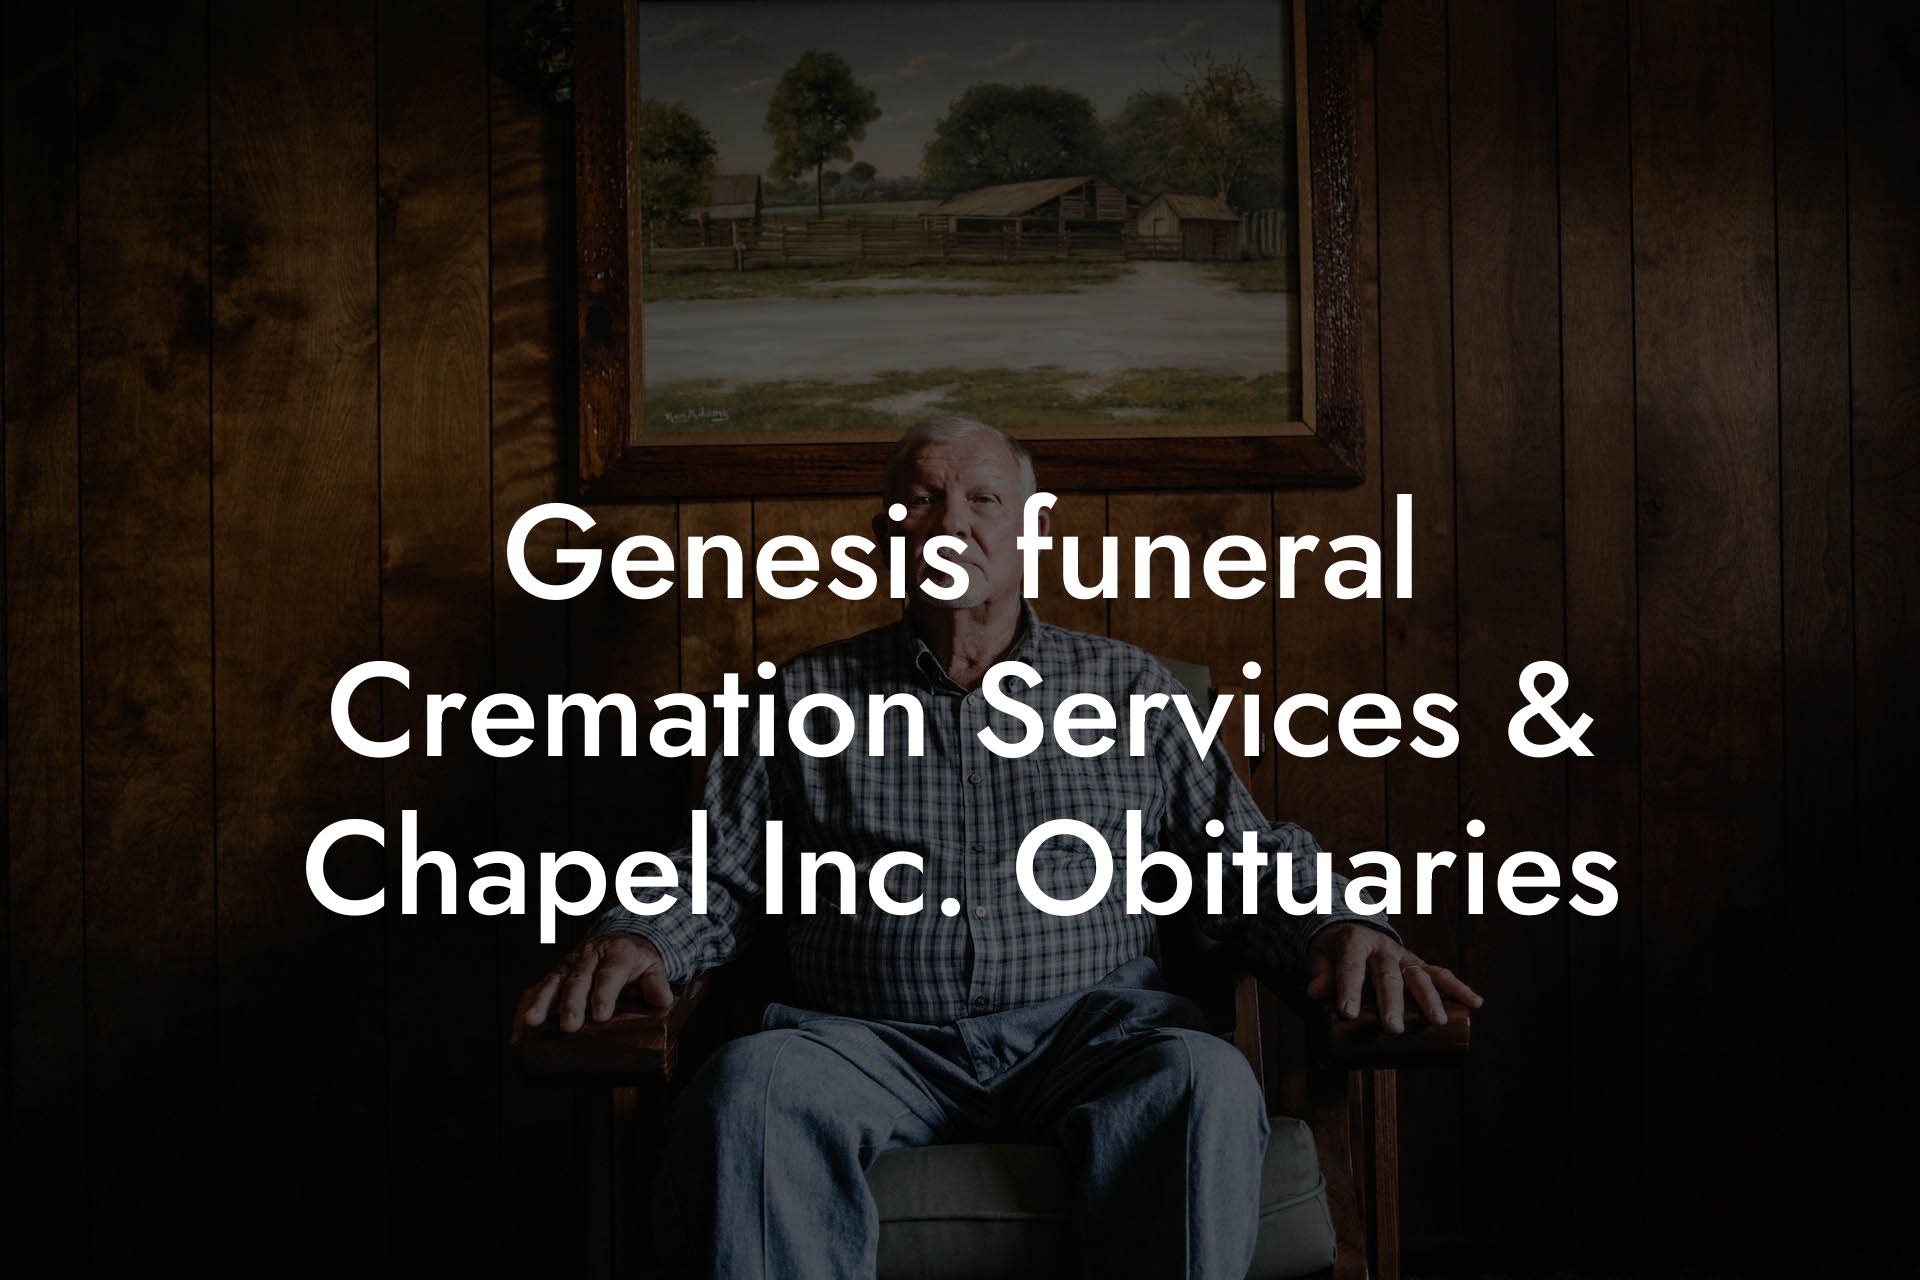 Genesis funeral Cremation Services & Chapel Inc. Obituaries